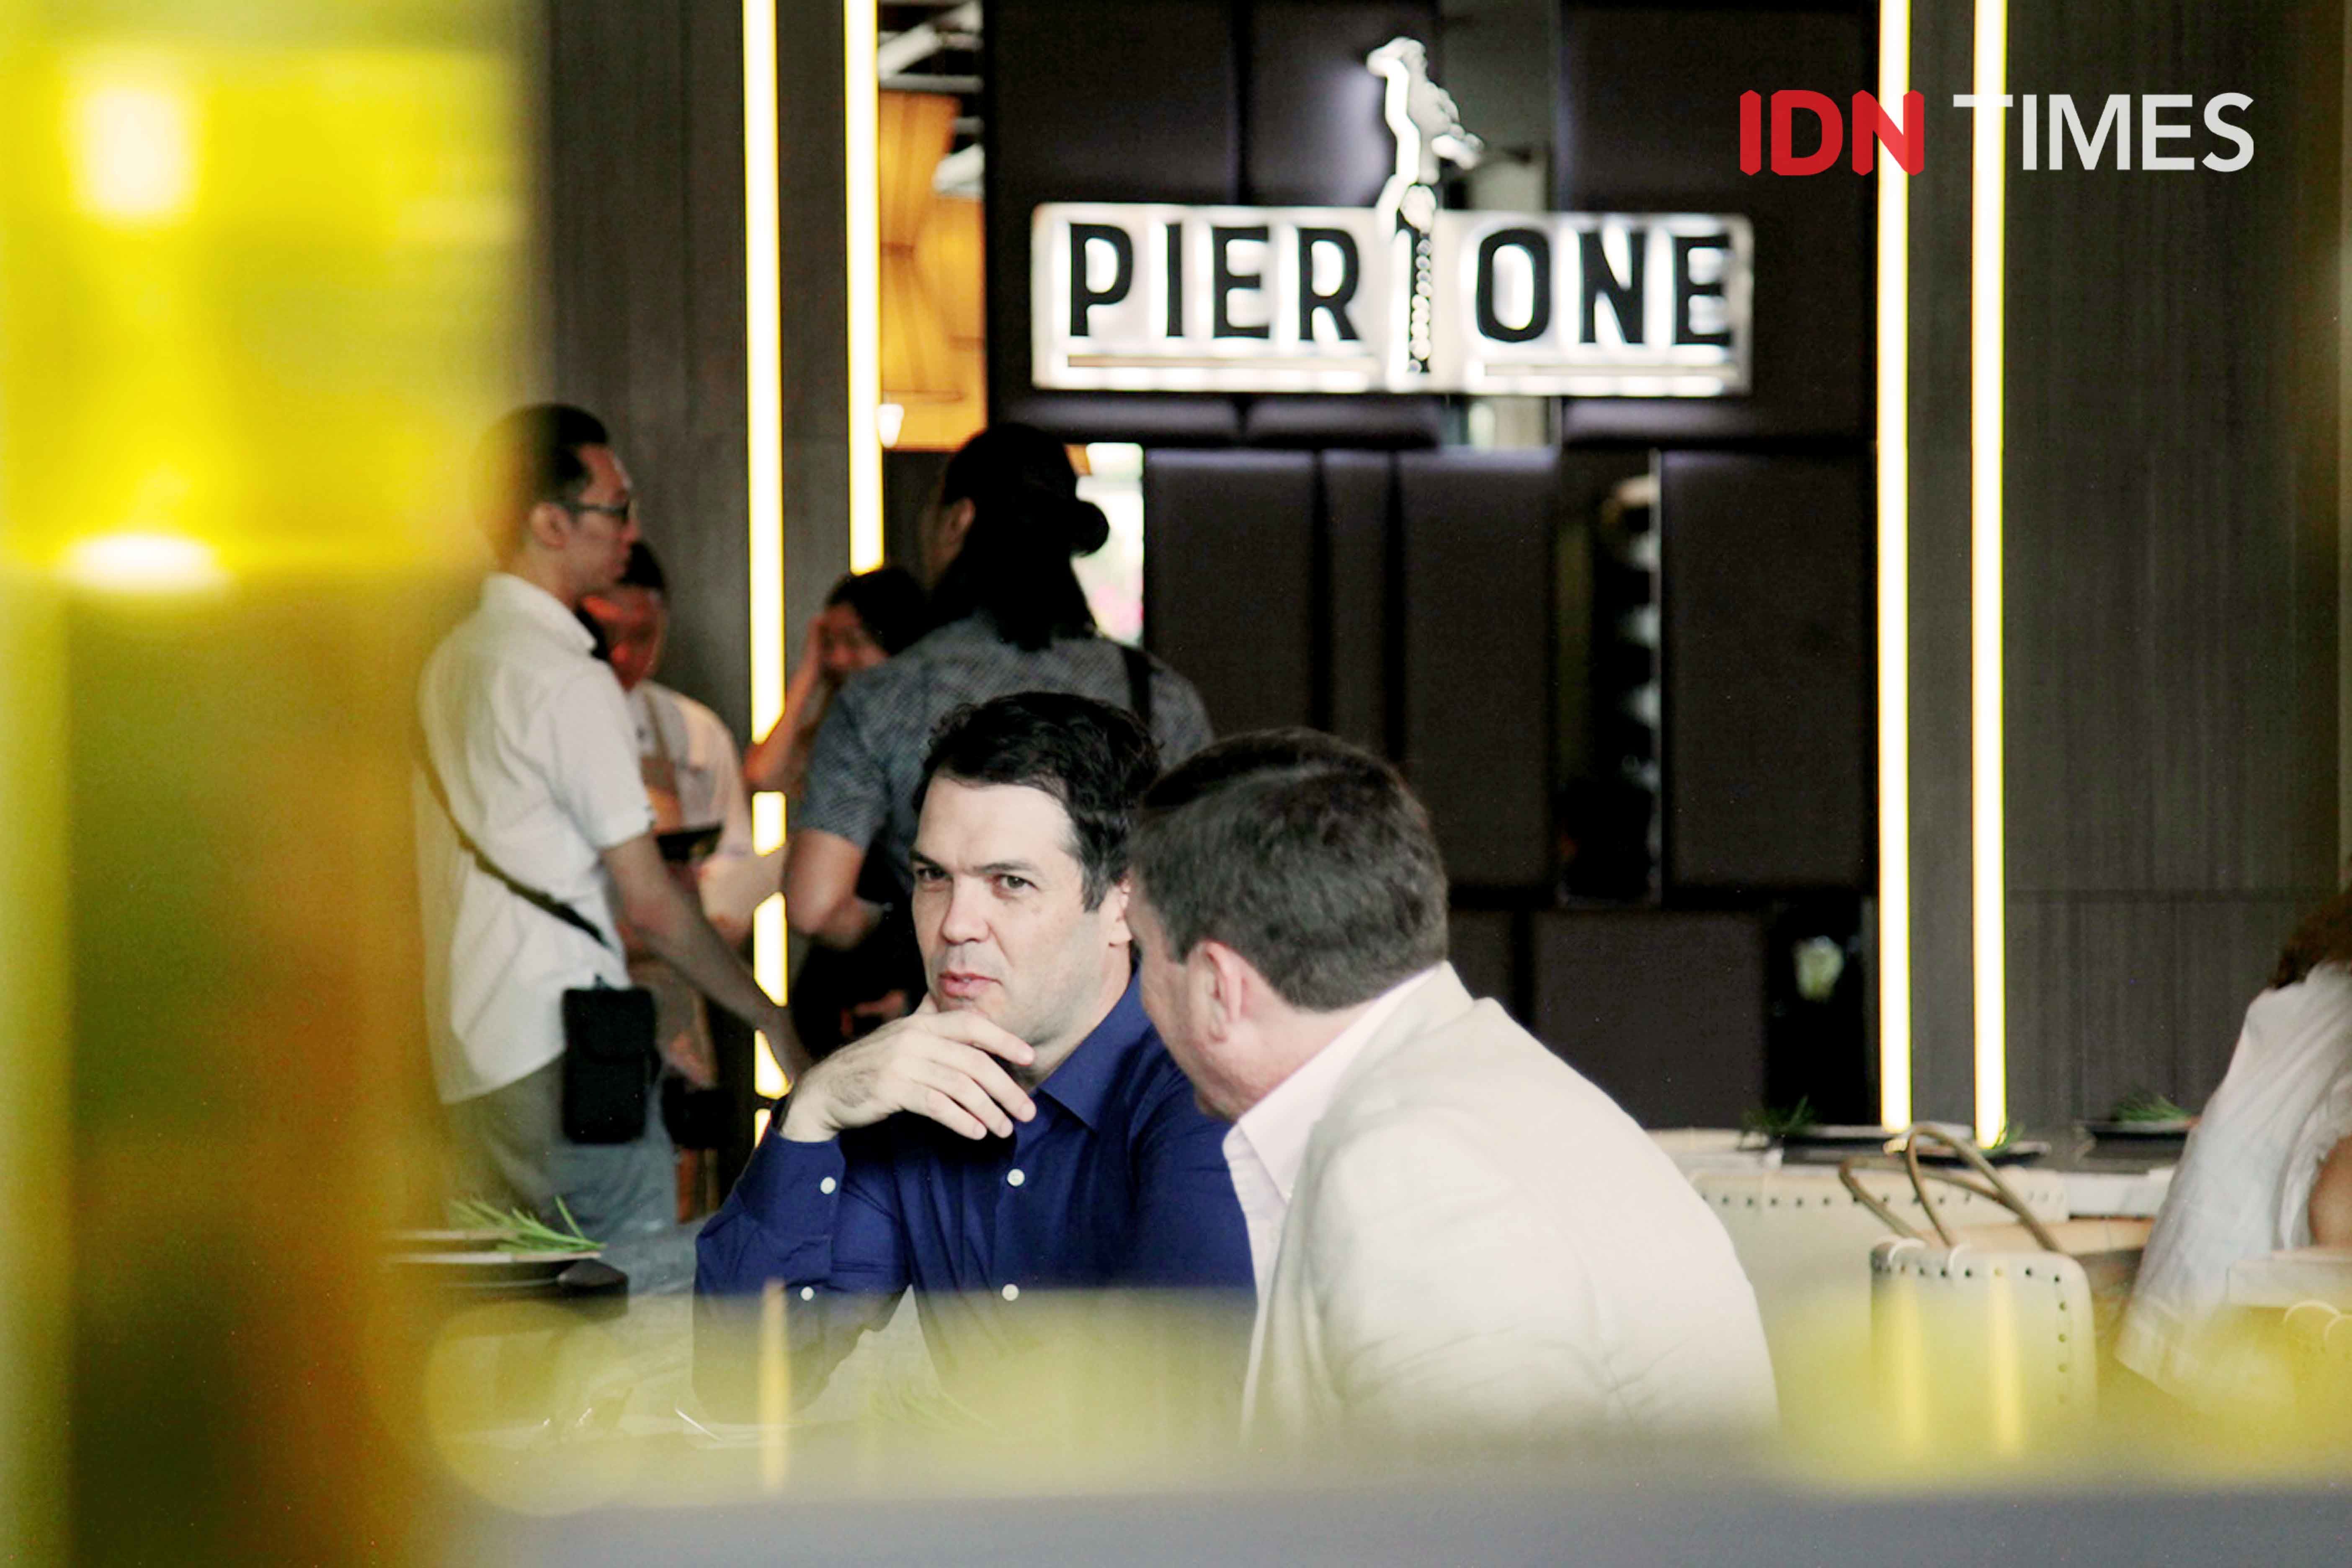 Pertama di Surabaya, Ini 13 Potret Pier One Restoran khas Australia